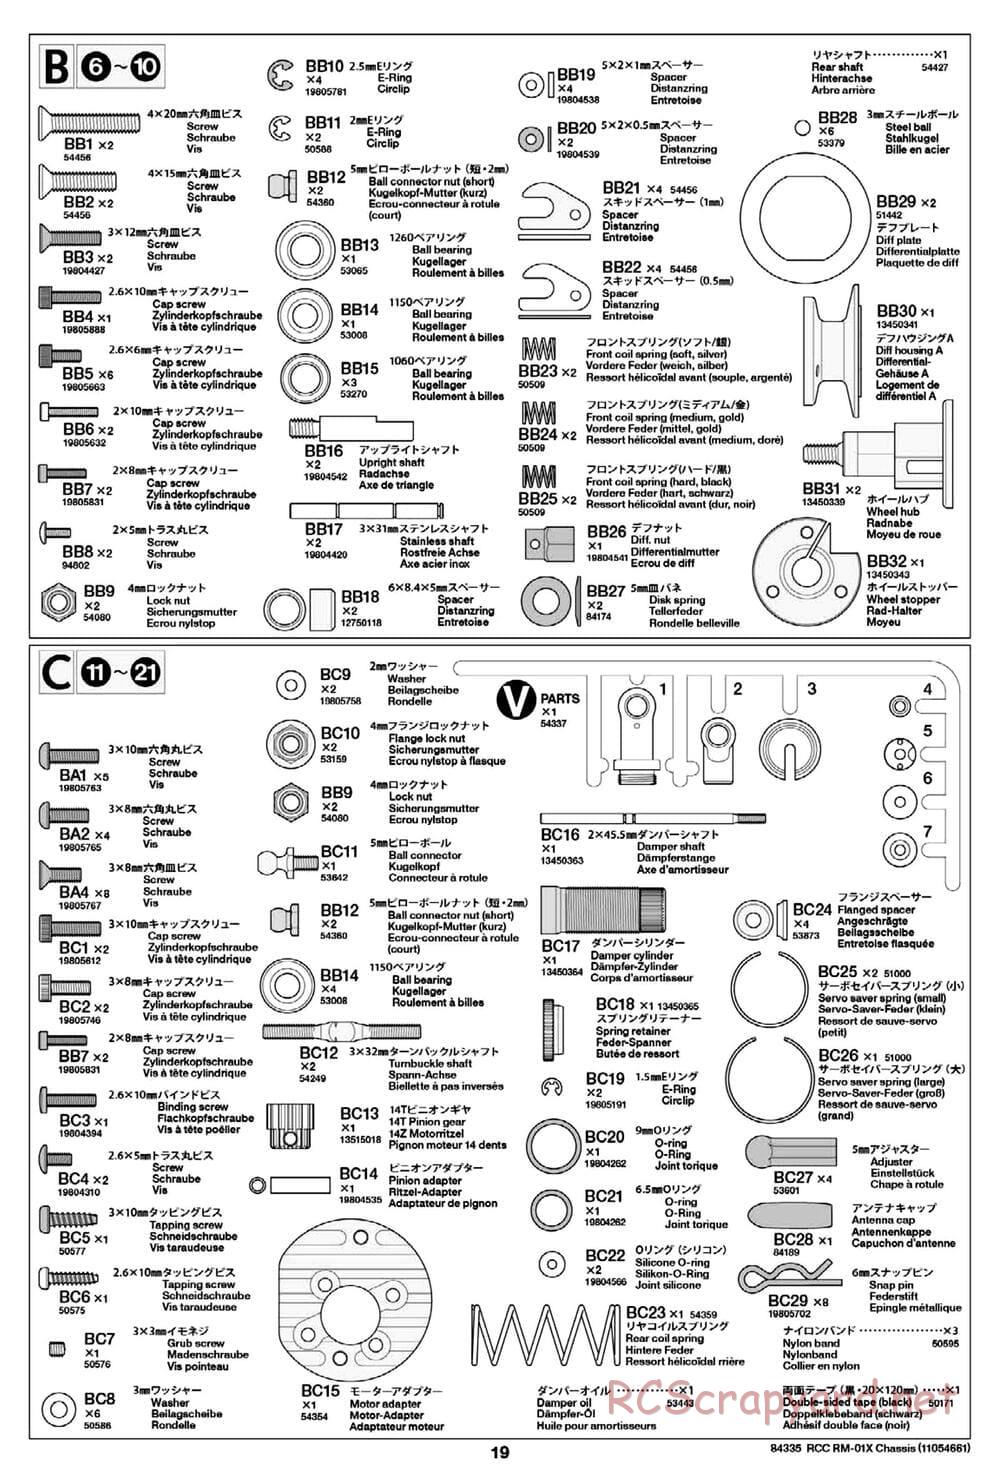 Tamiya - RM-01X Chassis - Manual - Page 19